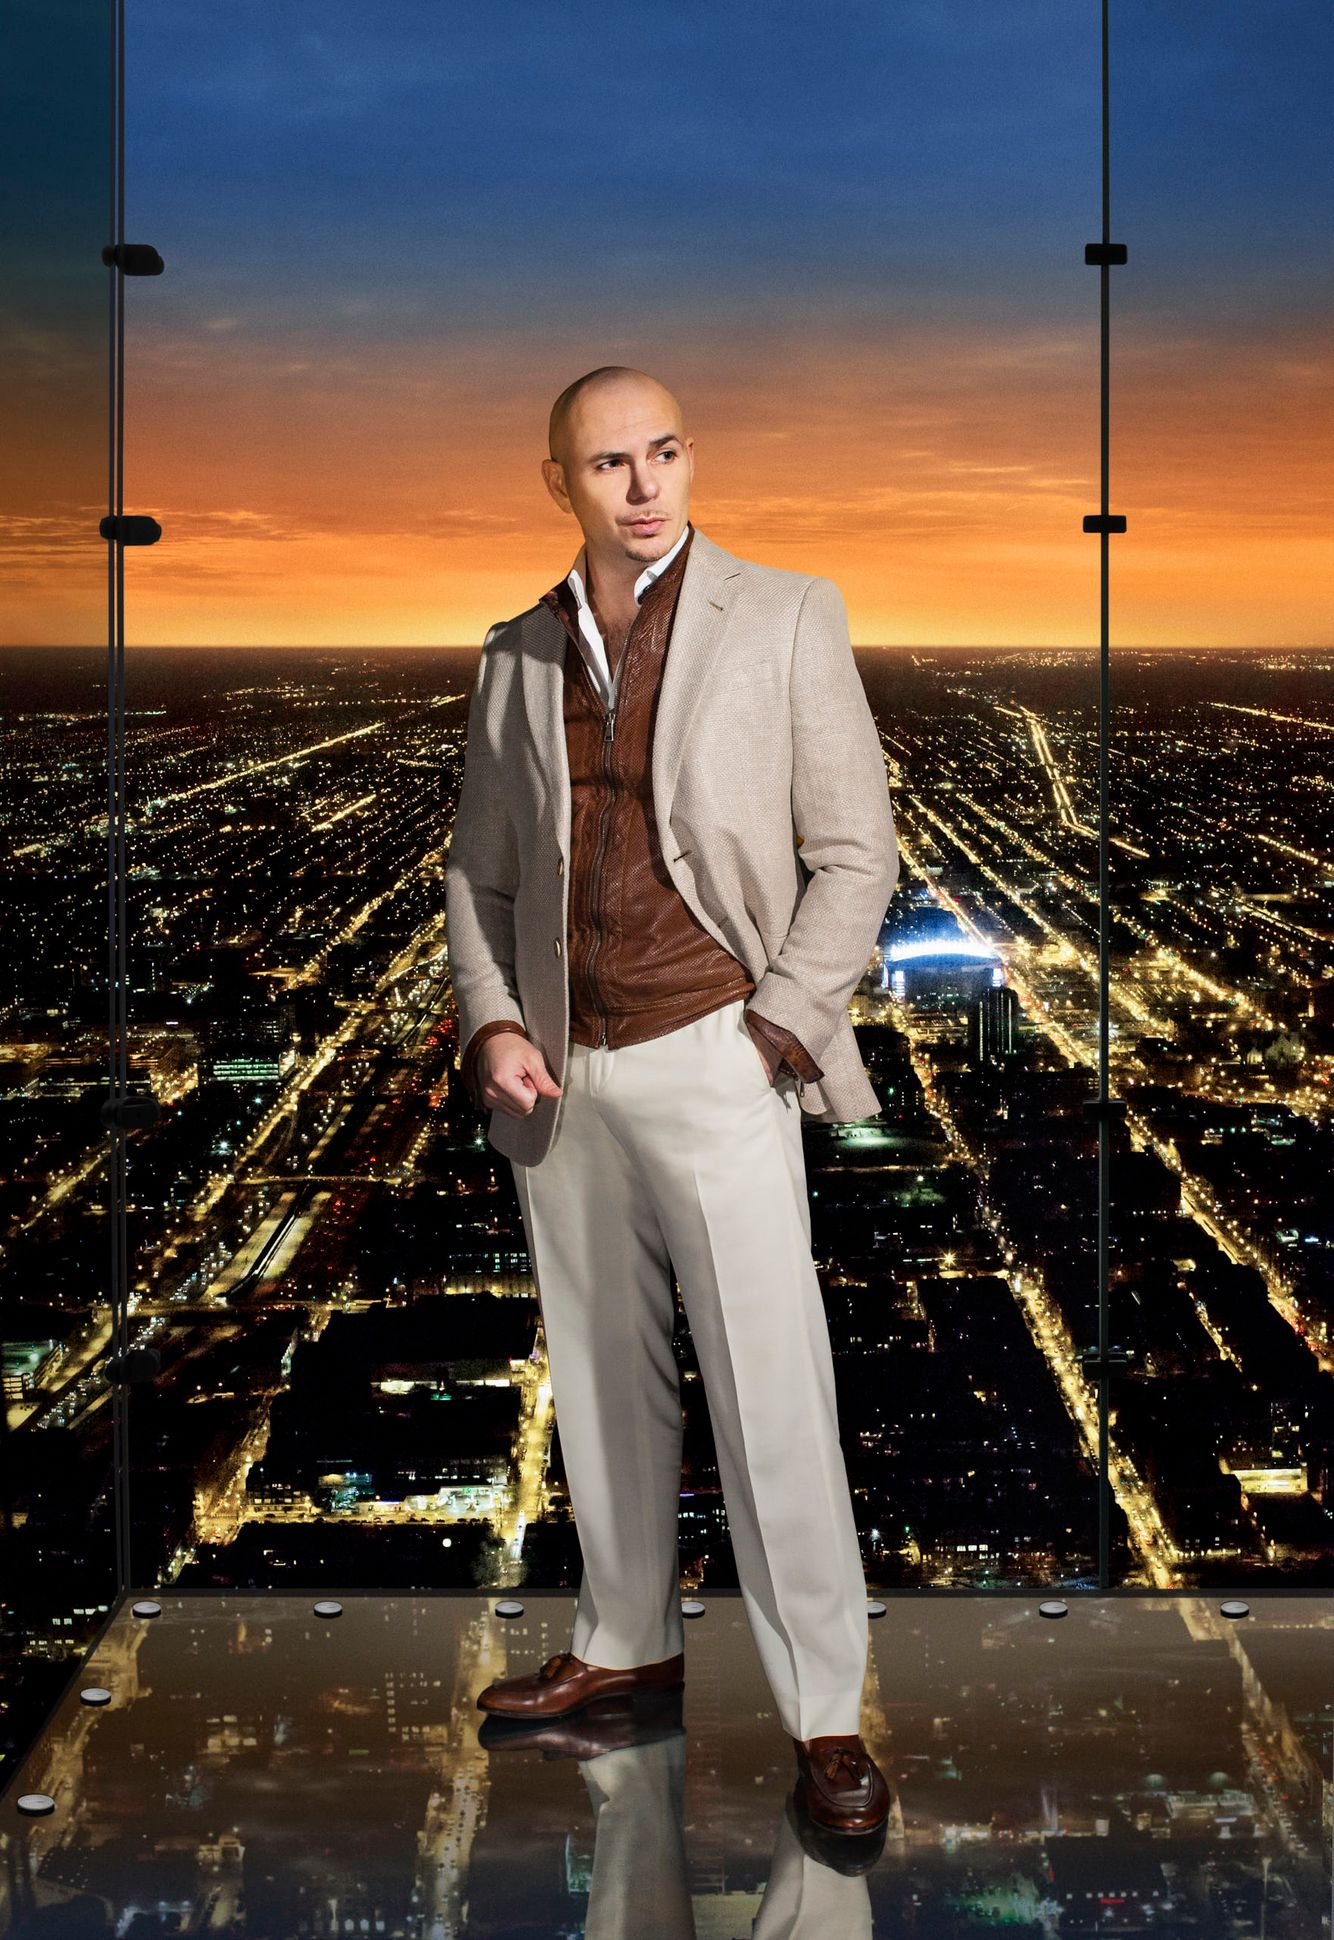 Pitbull By Chicago Celebrity Portrait Photographer Jeff Schear